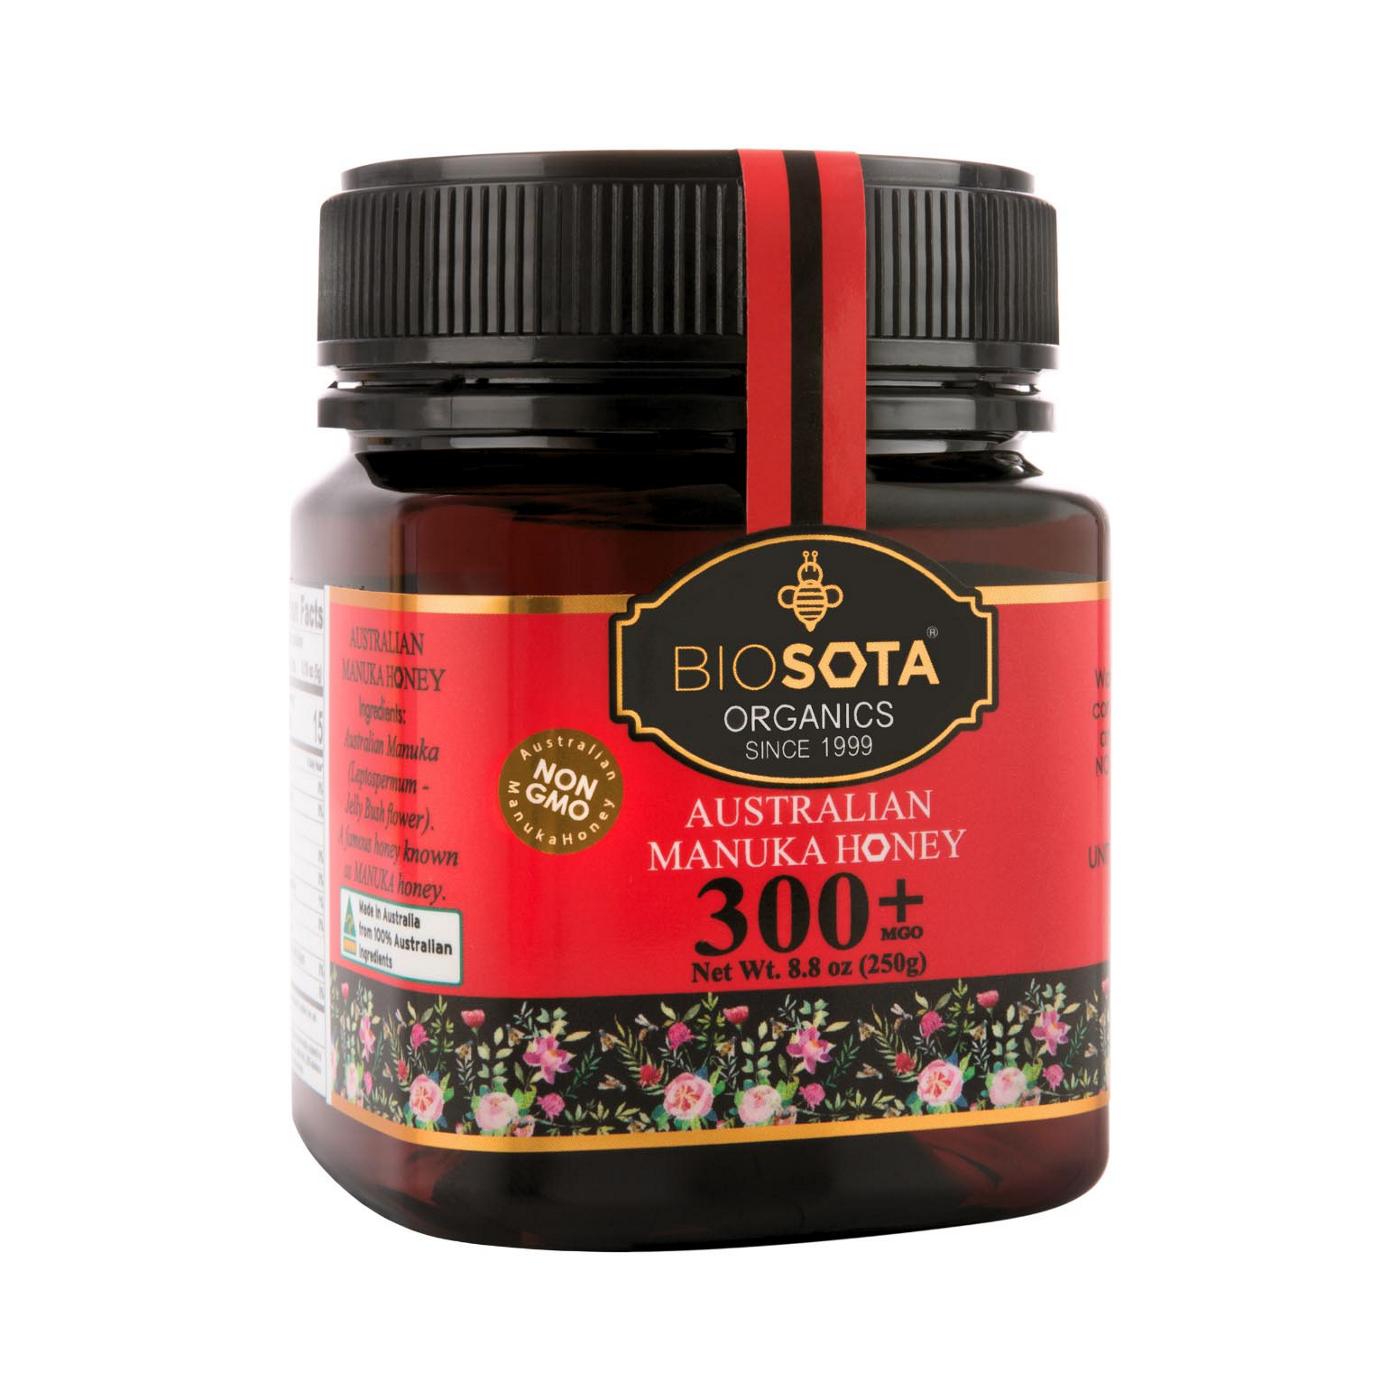 Biosota Organics Australian Manuka Honey MGO300; image 1 of 2